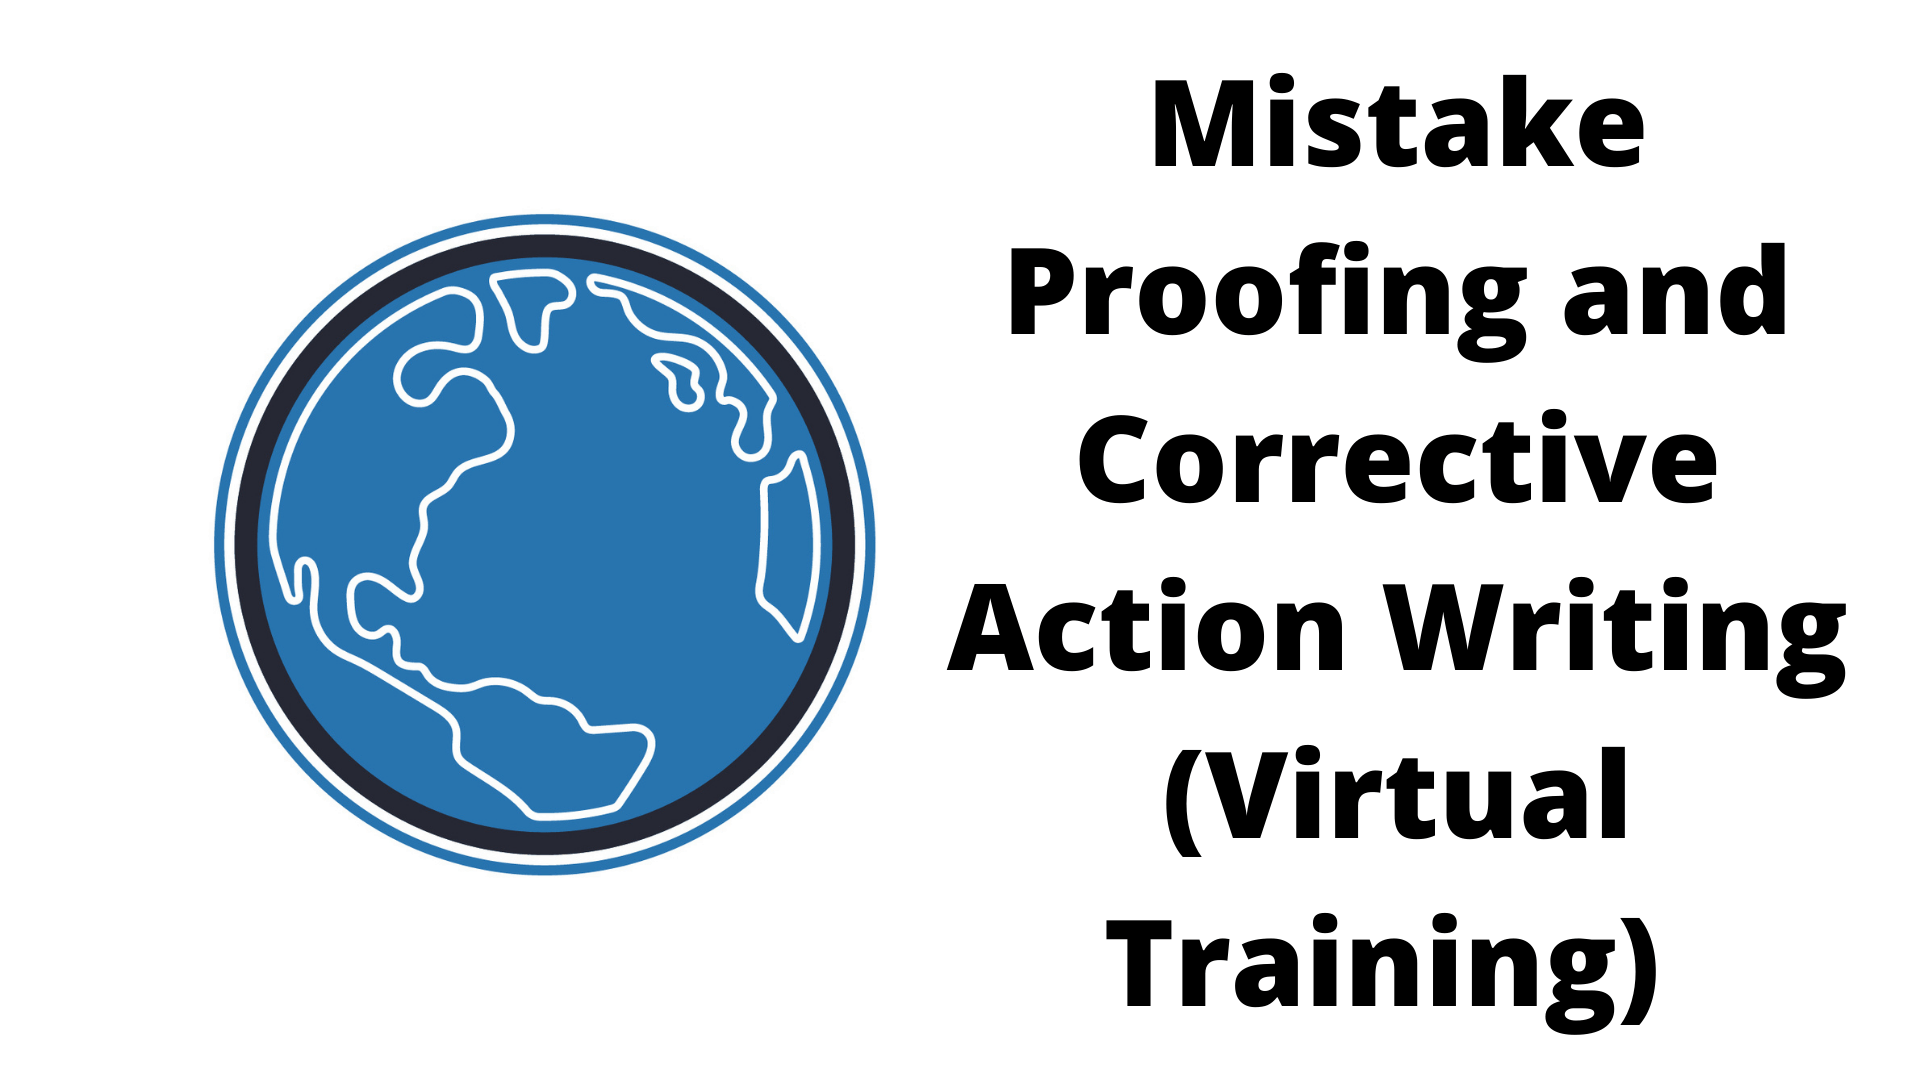 corrective action writing